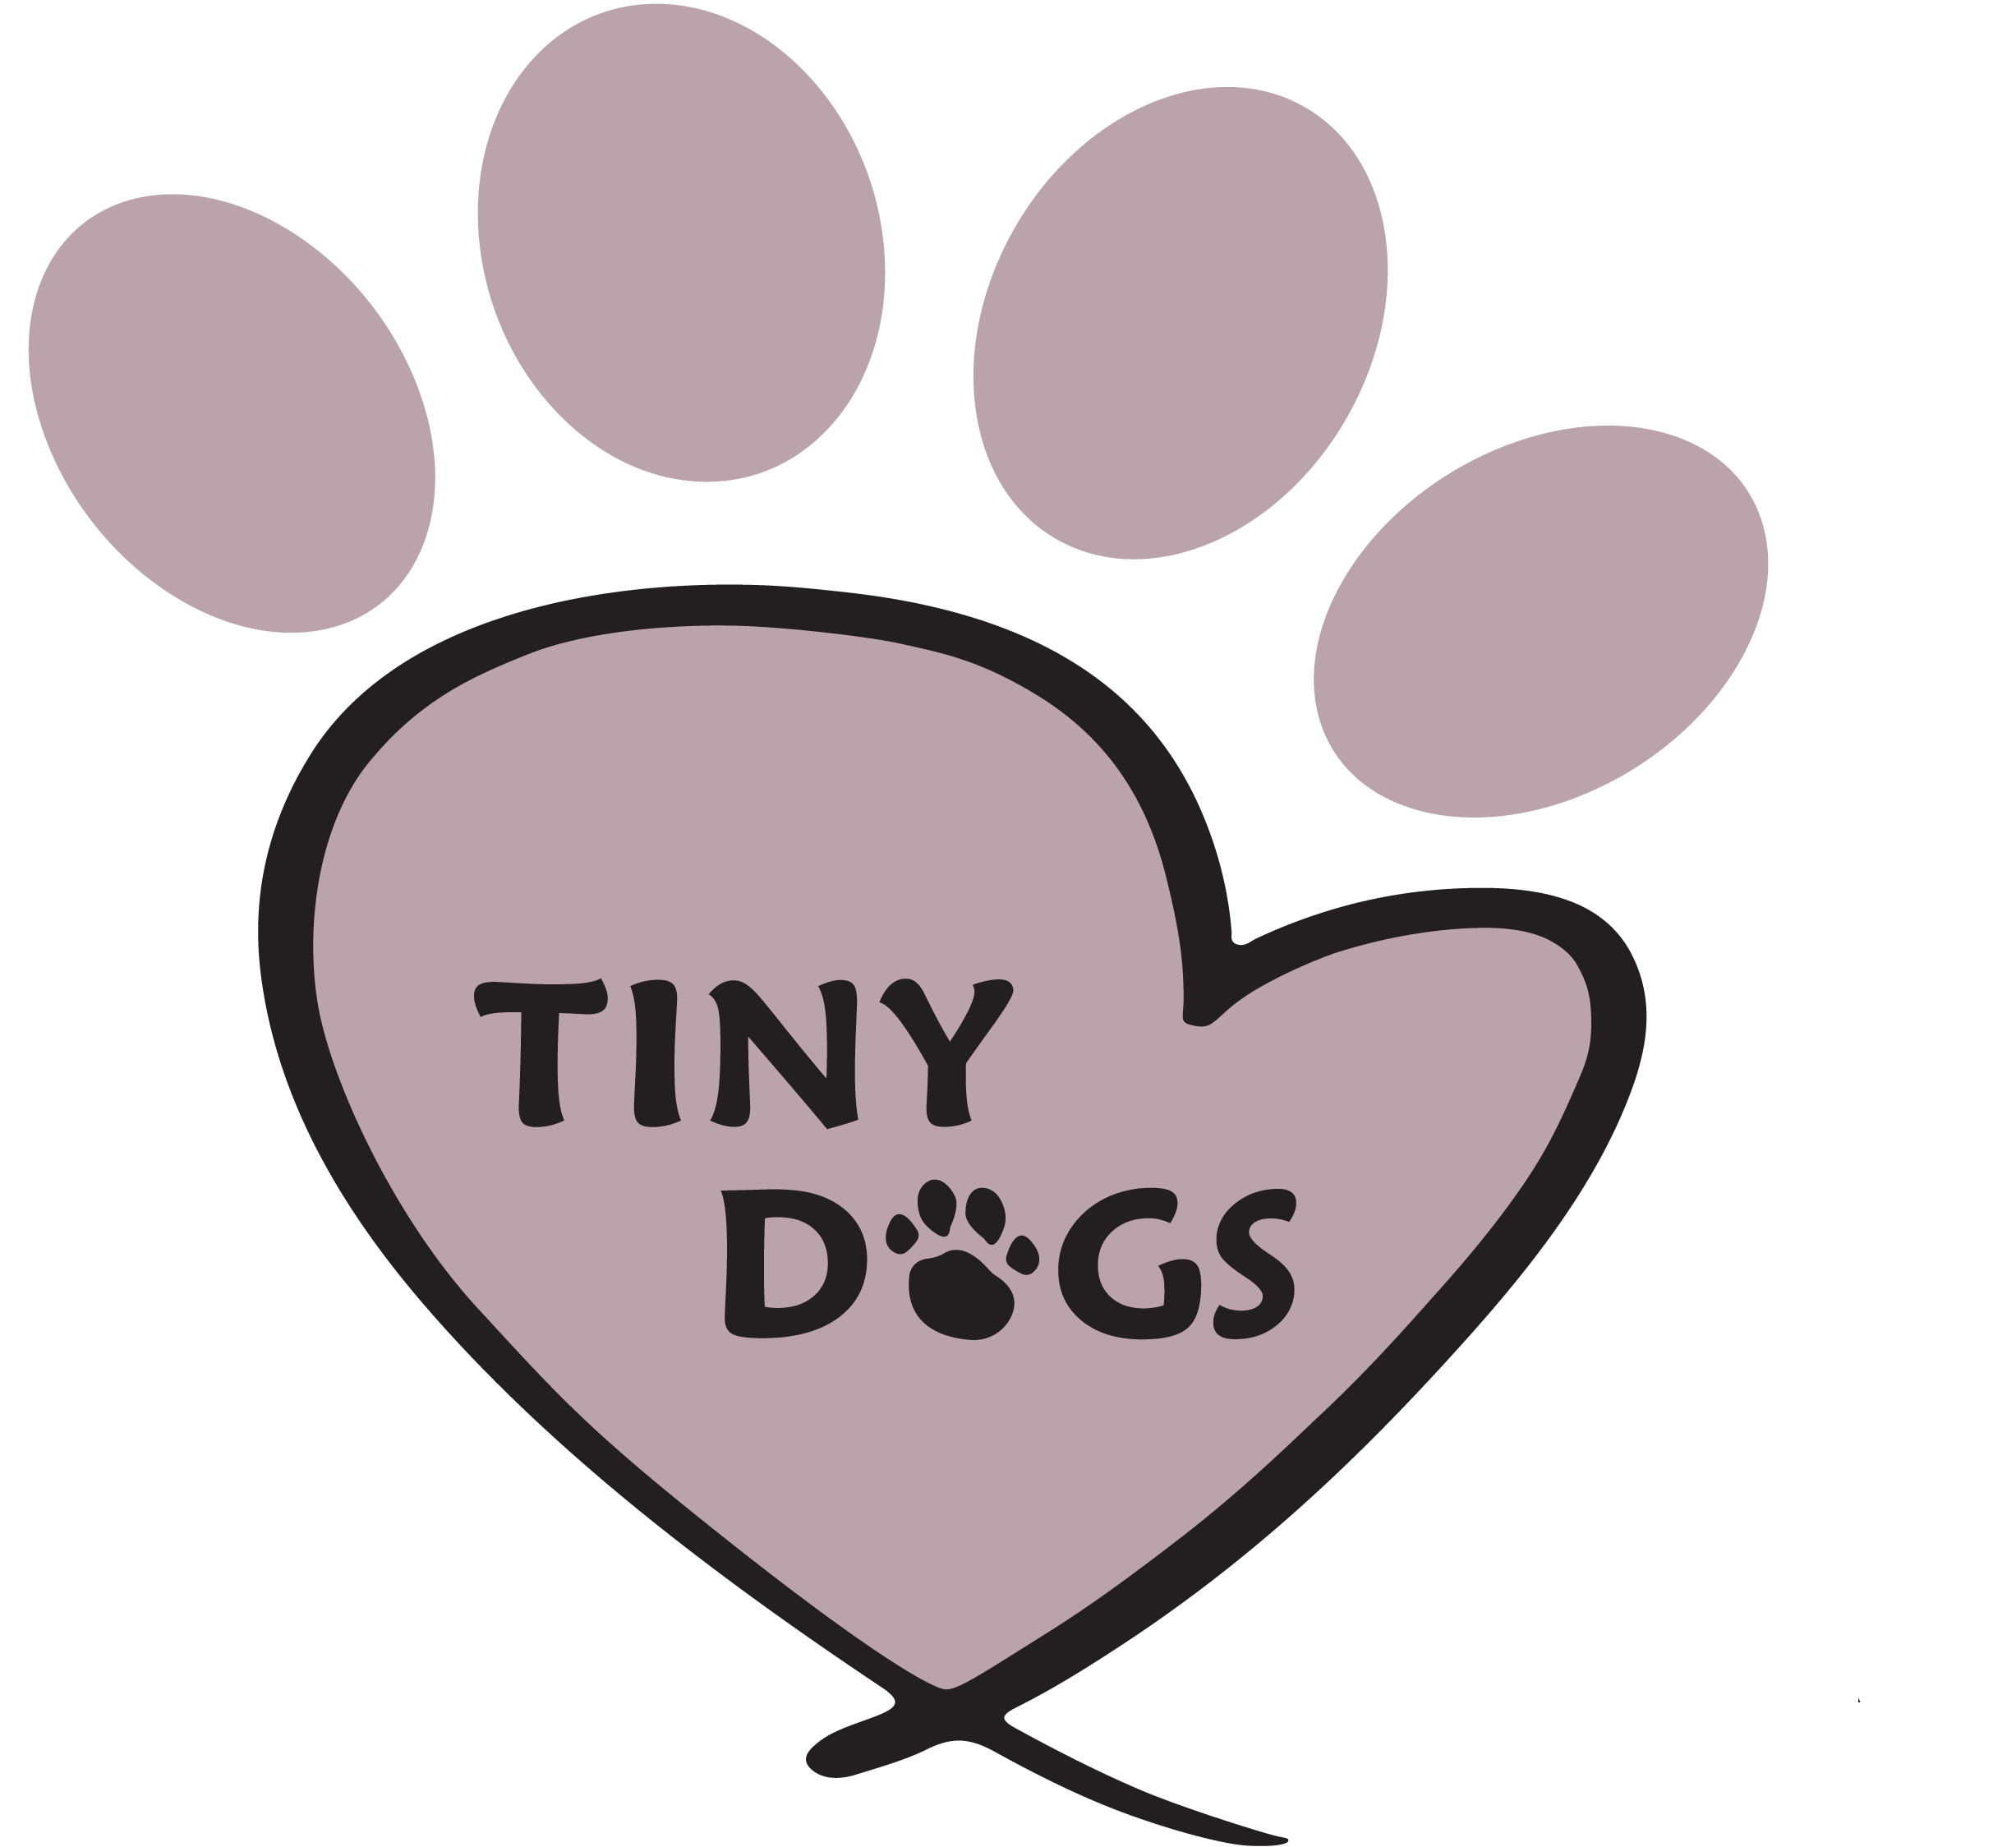 TinyDogs - hundesalon og forkælelse for små hunde